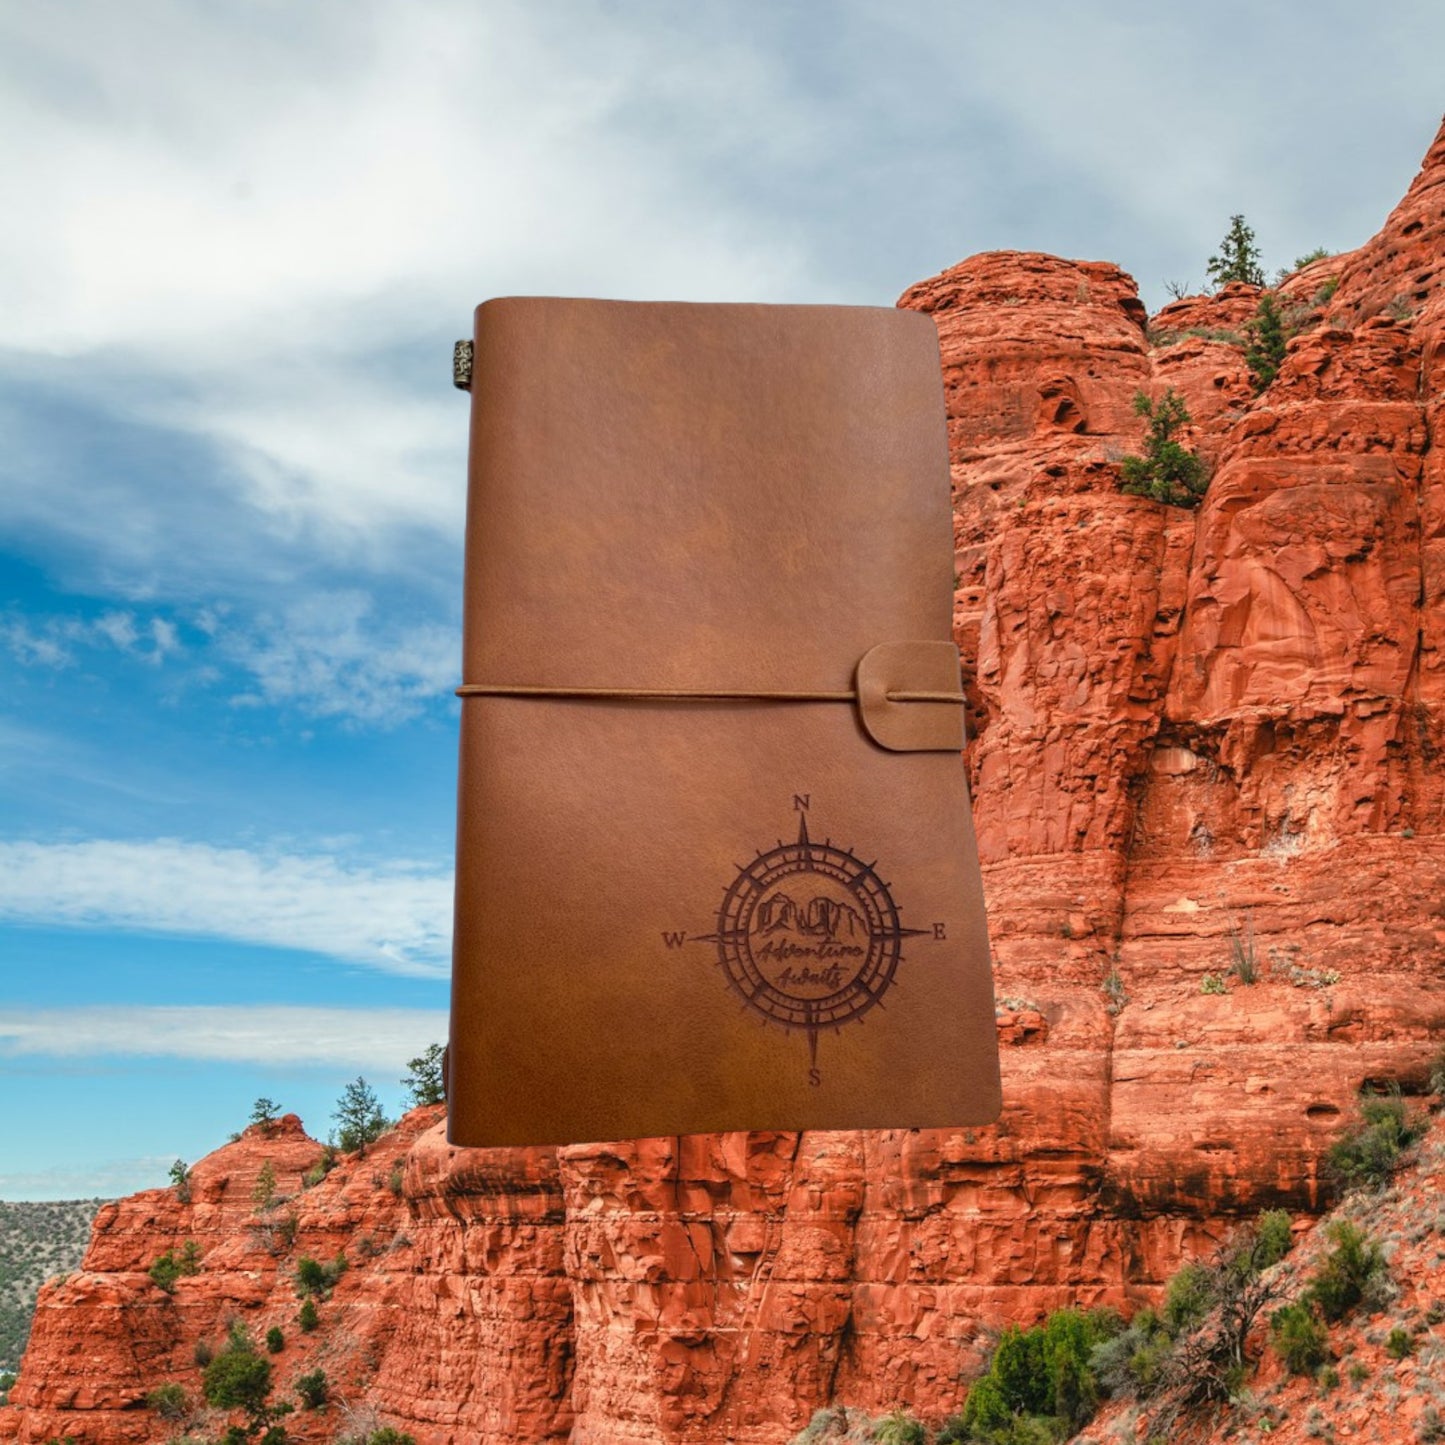 Journal- Adventure awaits travel journal in brown